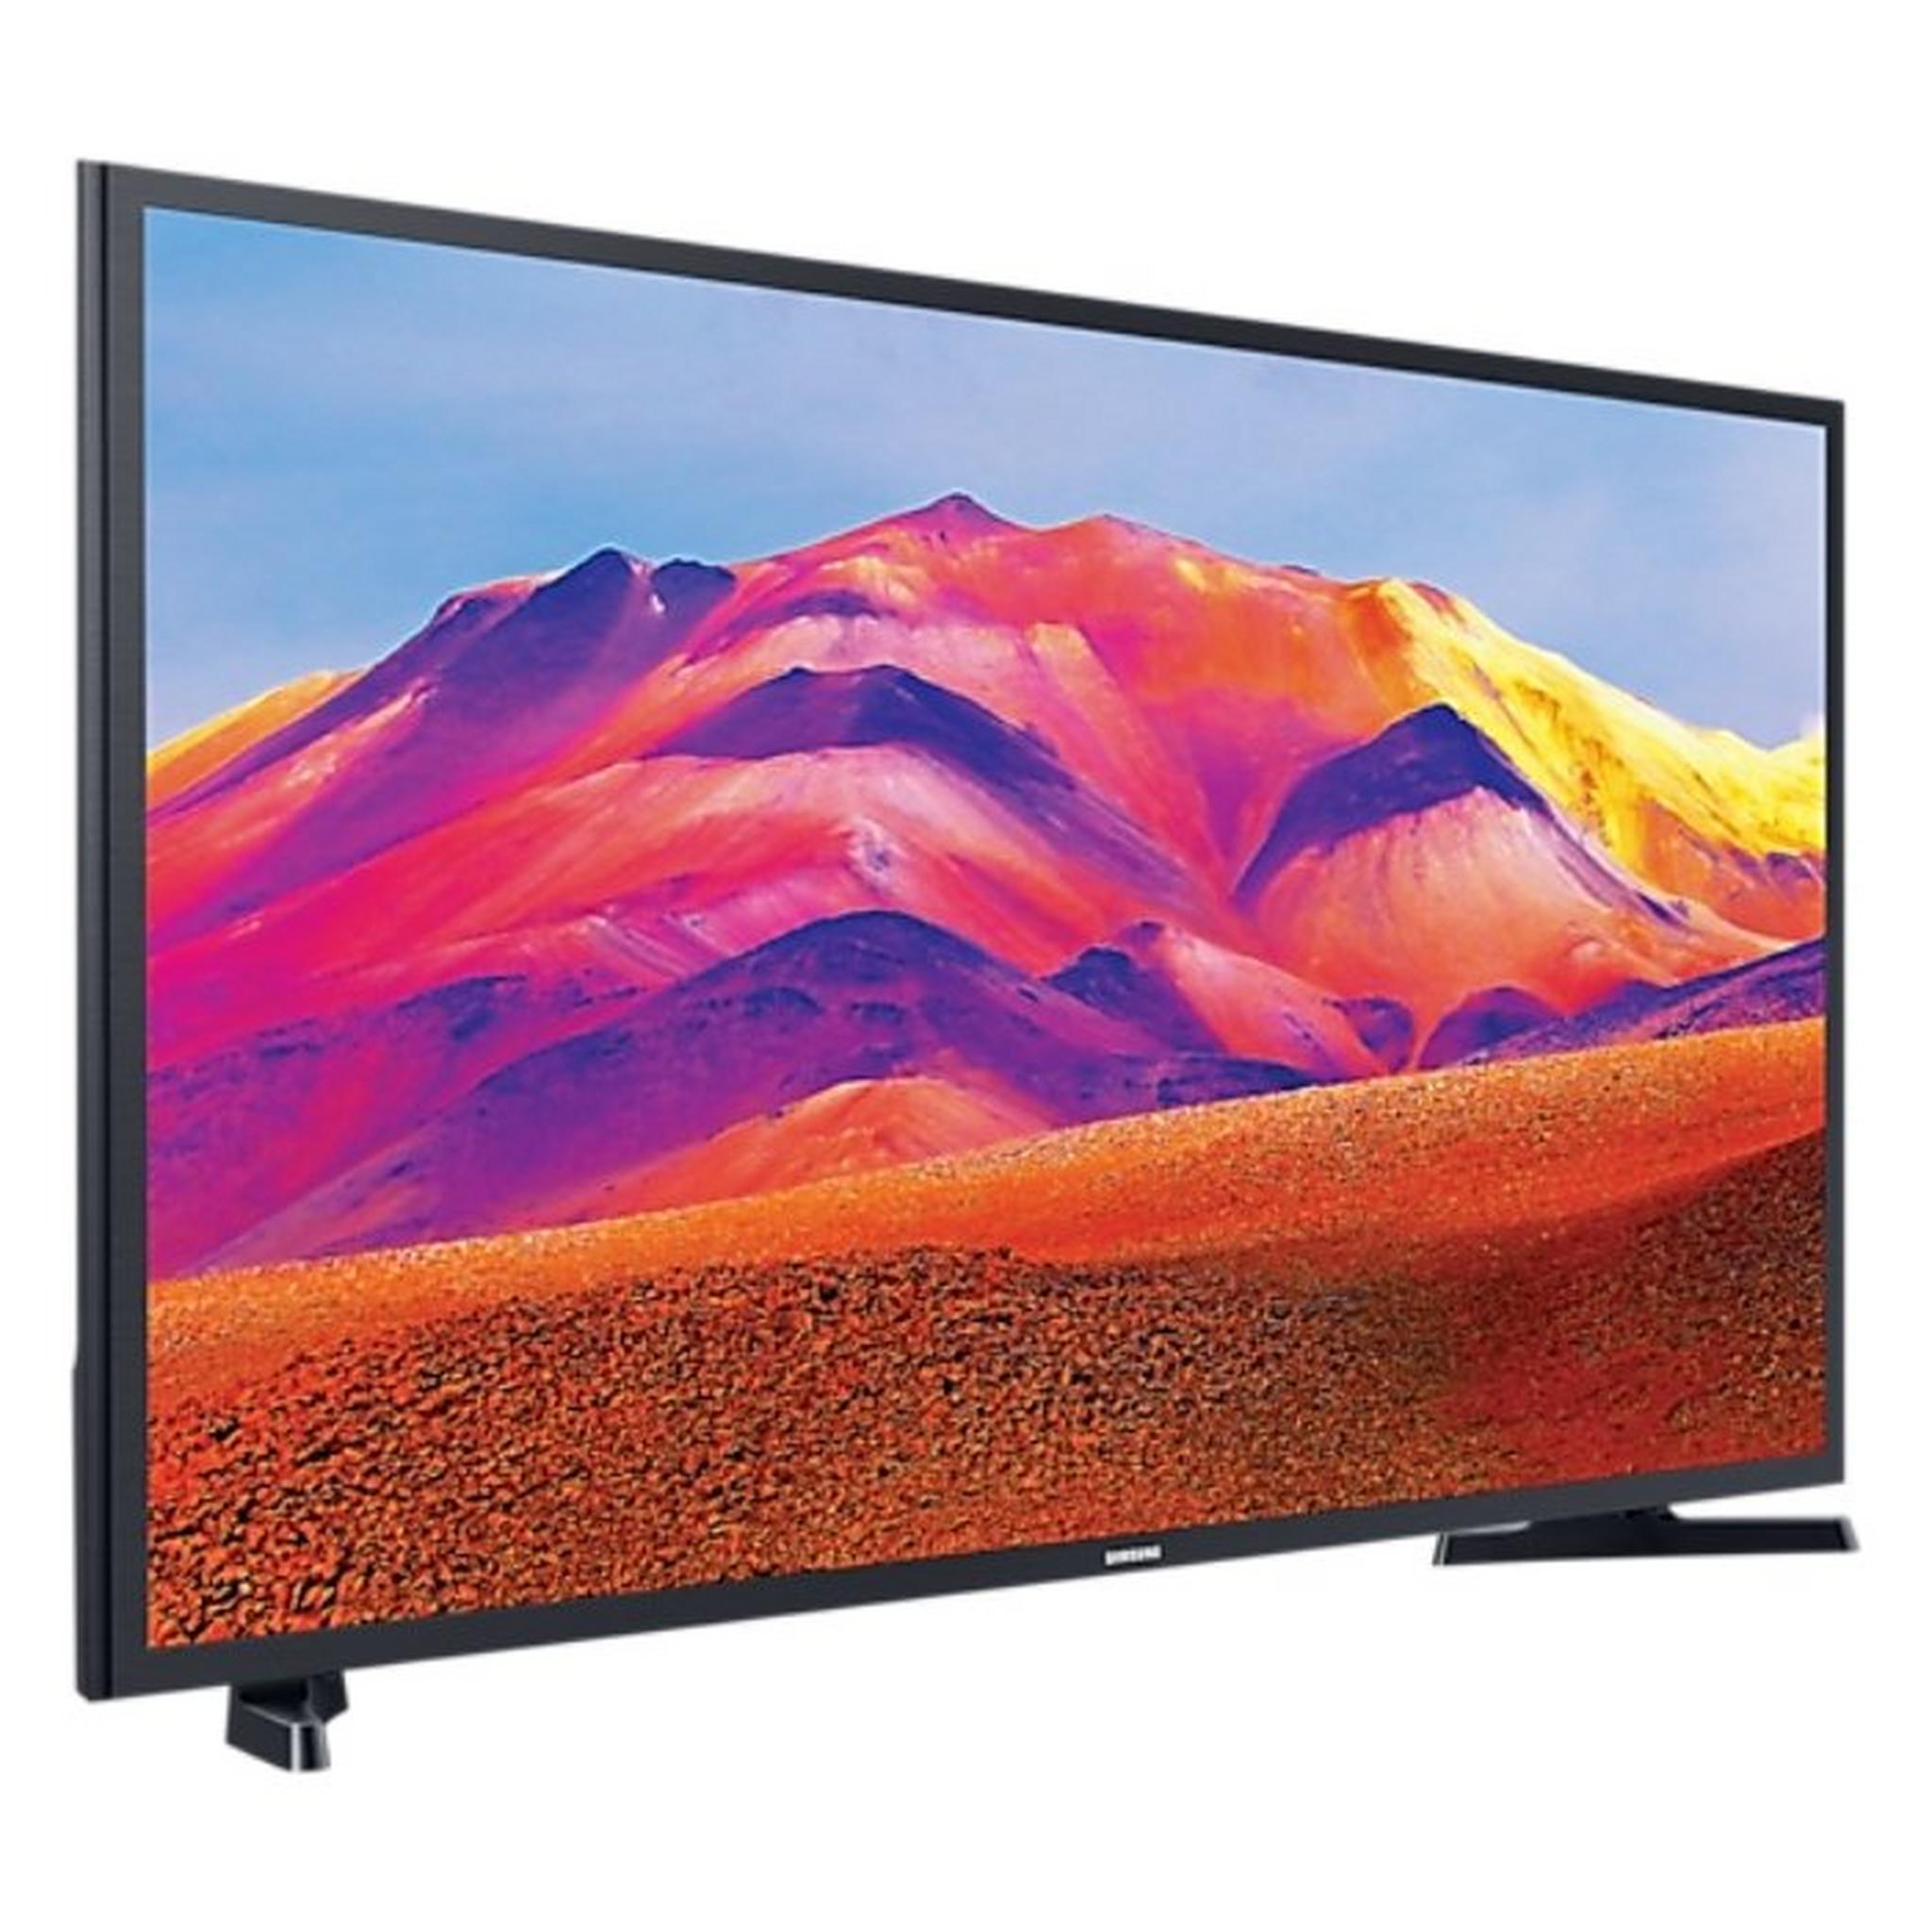 Samsung 43-inch FHD Smart TV - UA43T5300AUXUM